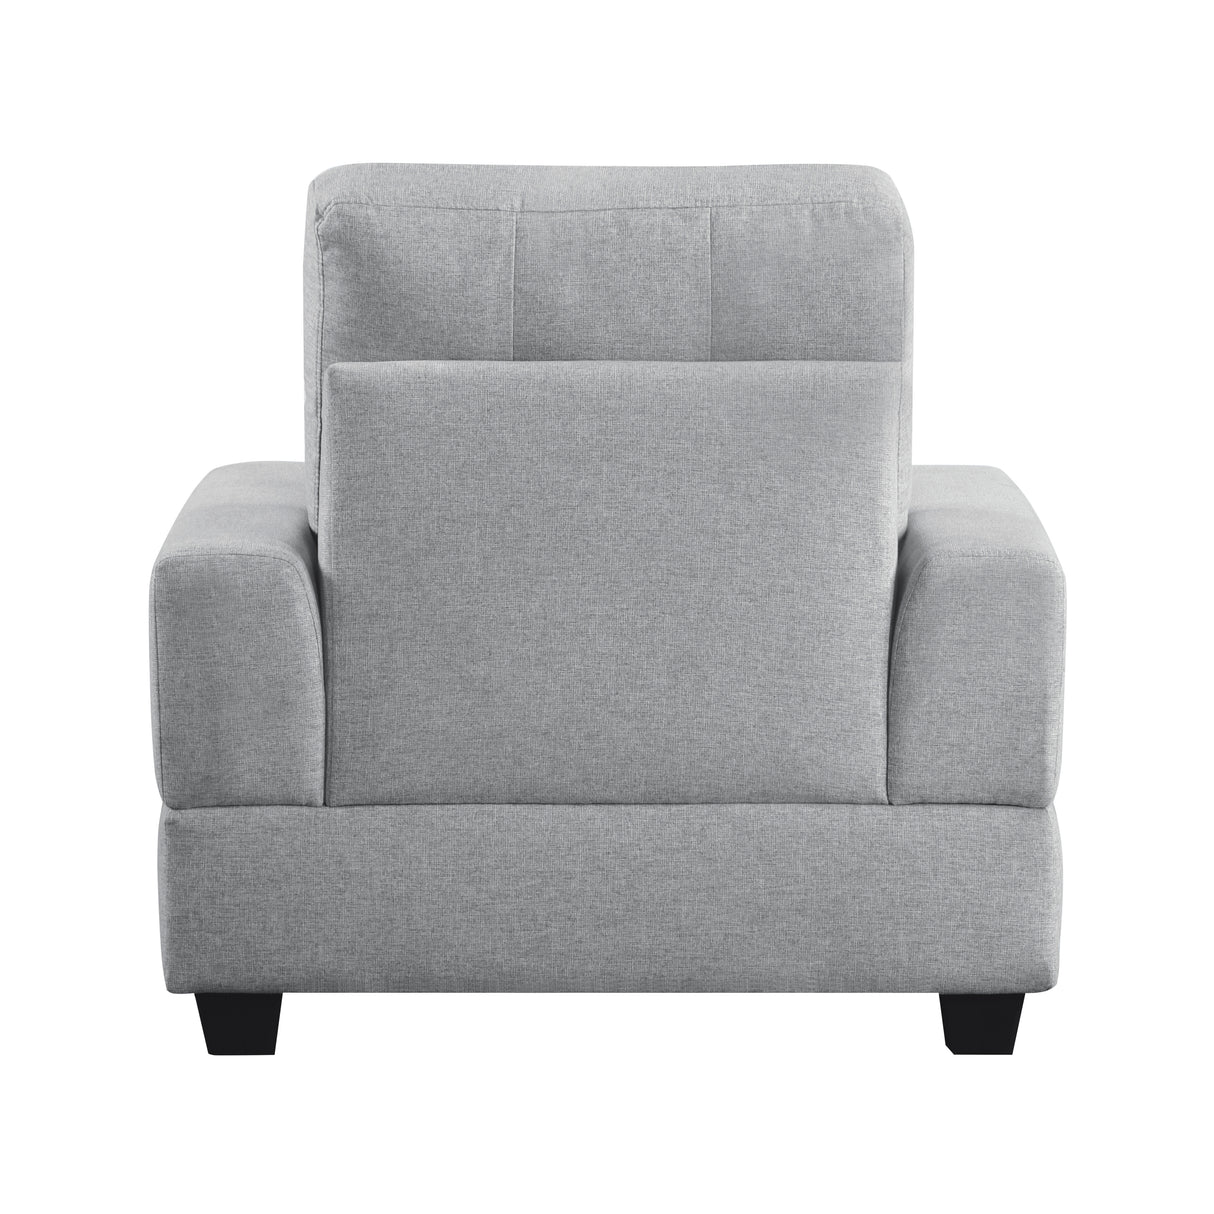 Dunstan Gray Chair